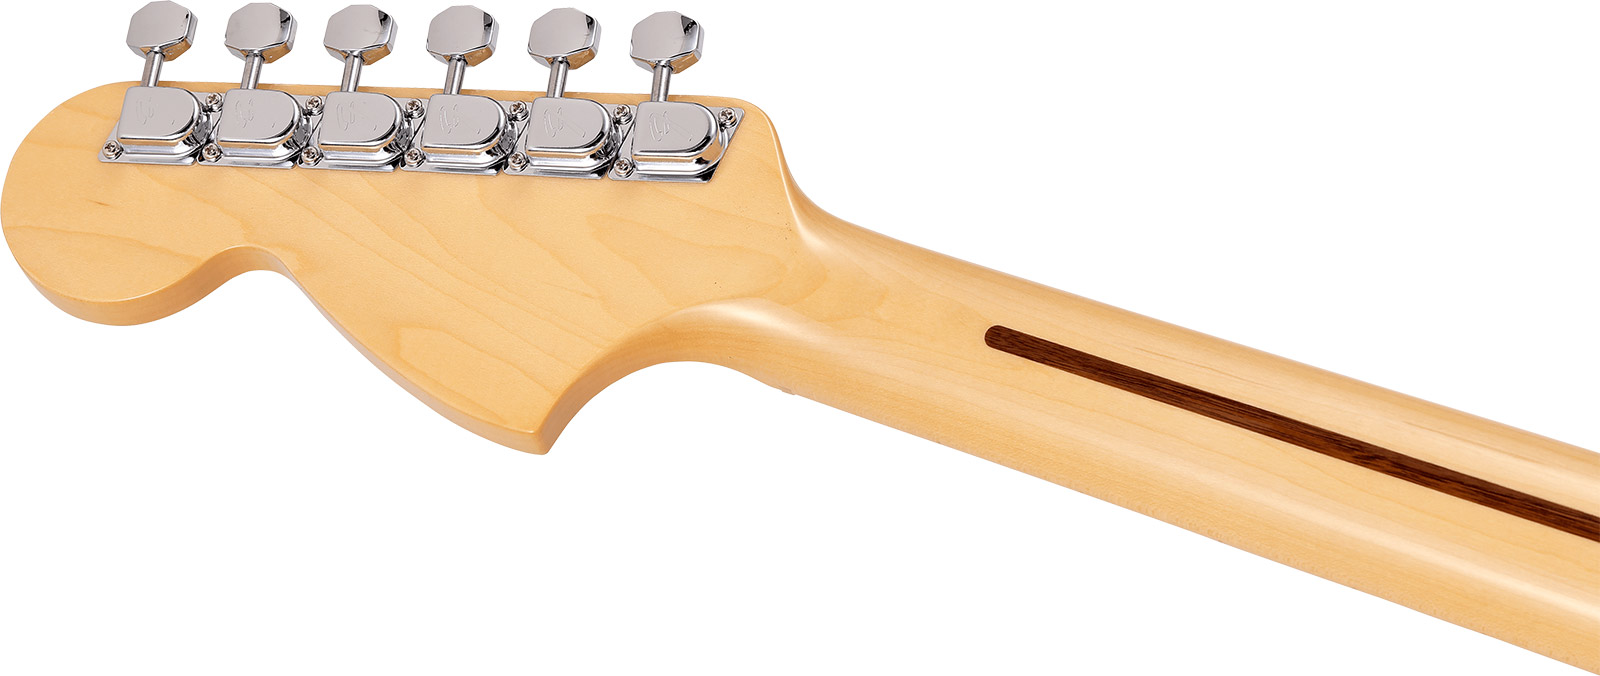 Fender Strat International Color Ltd Jap 3s Trem Mn - Monaco Yellow - Elektrische gitaar in Str-vorm - Variation 3